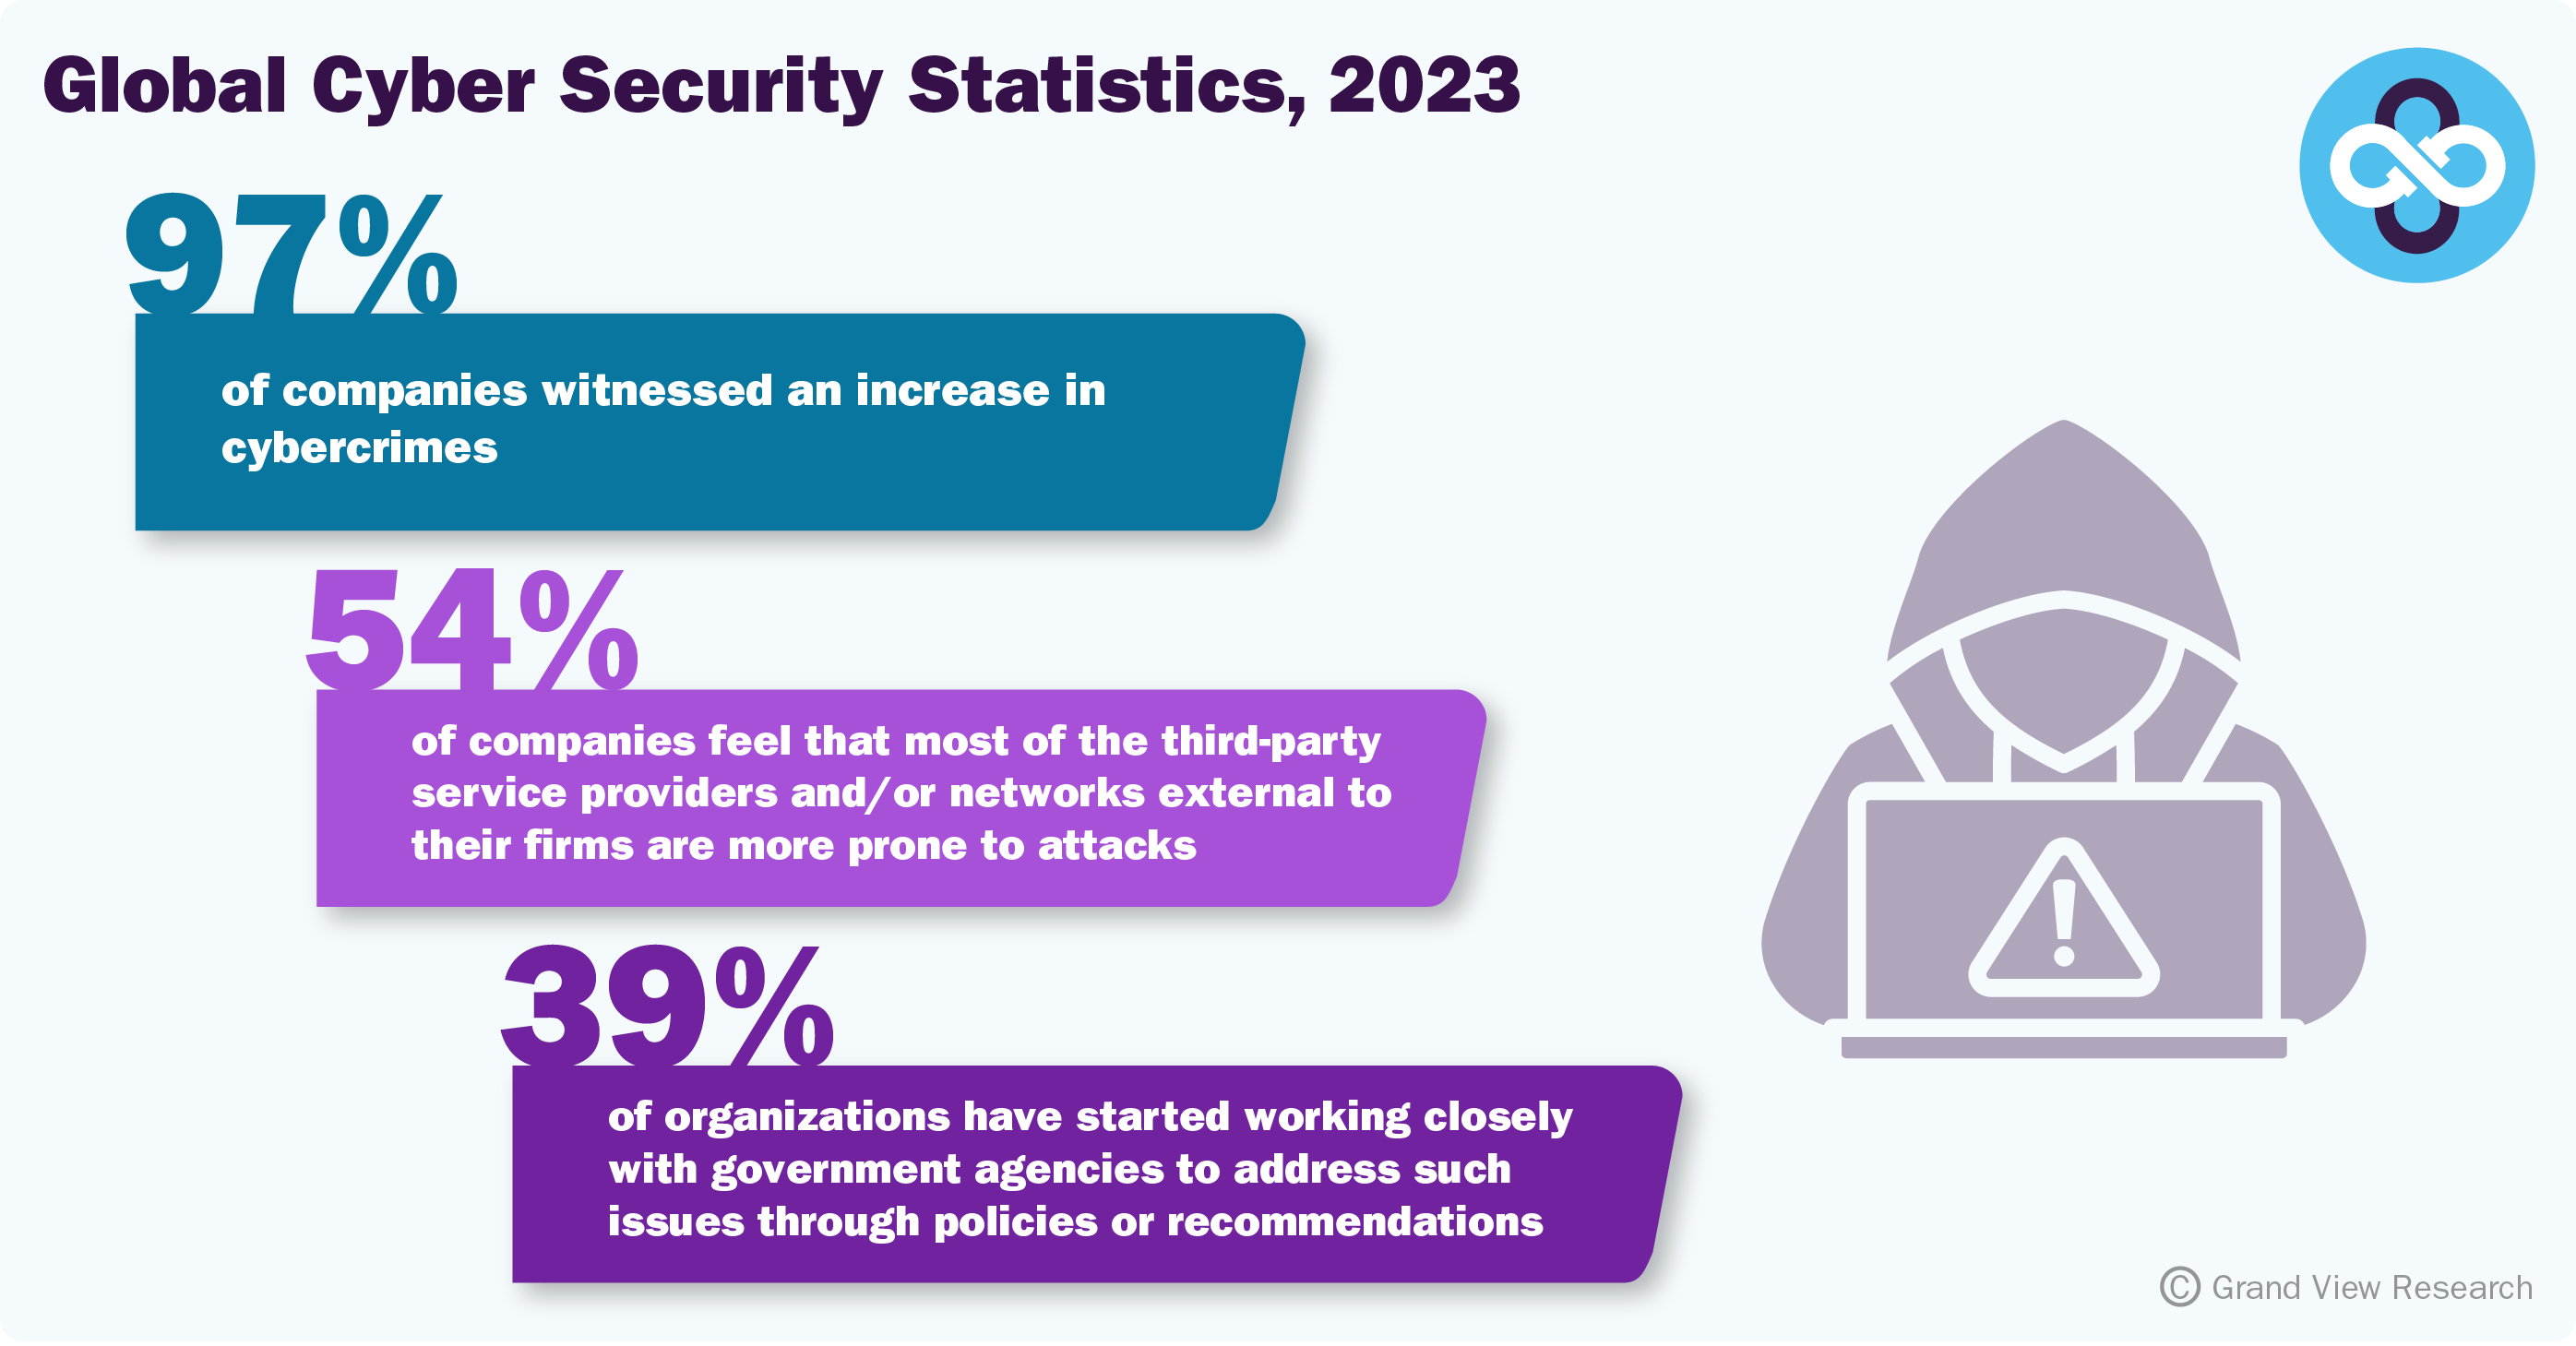 Global Cyber Security Statistics, 2023